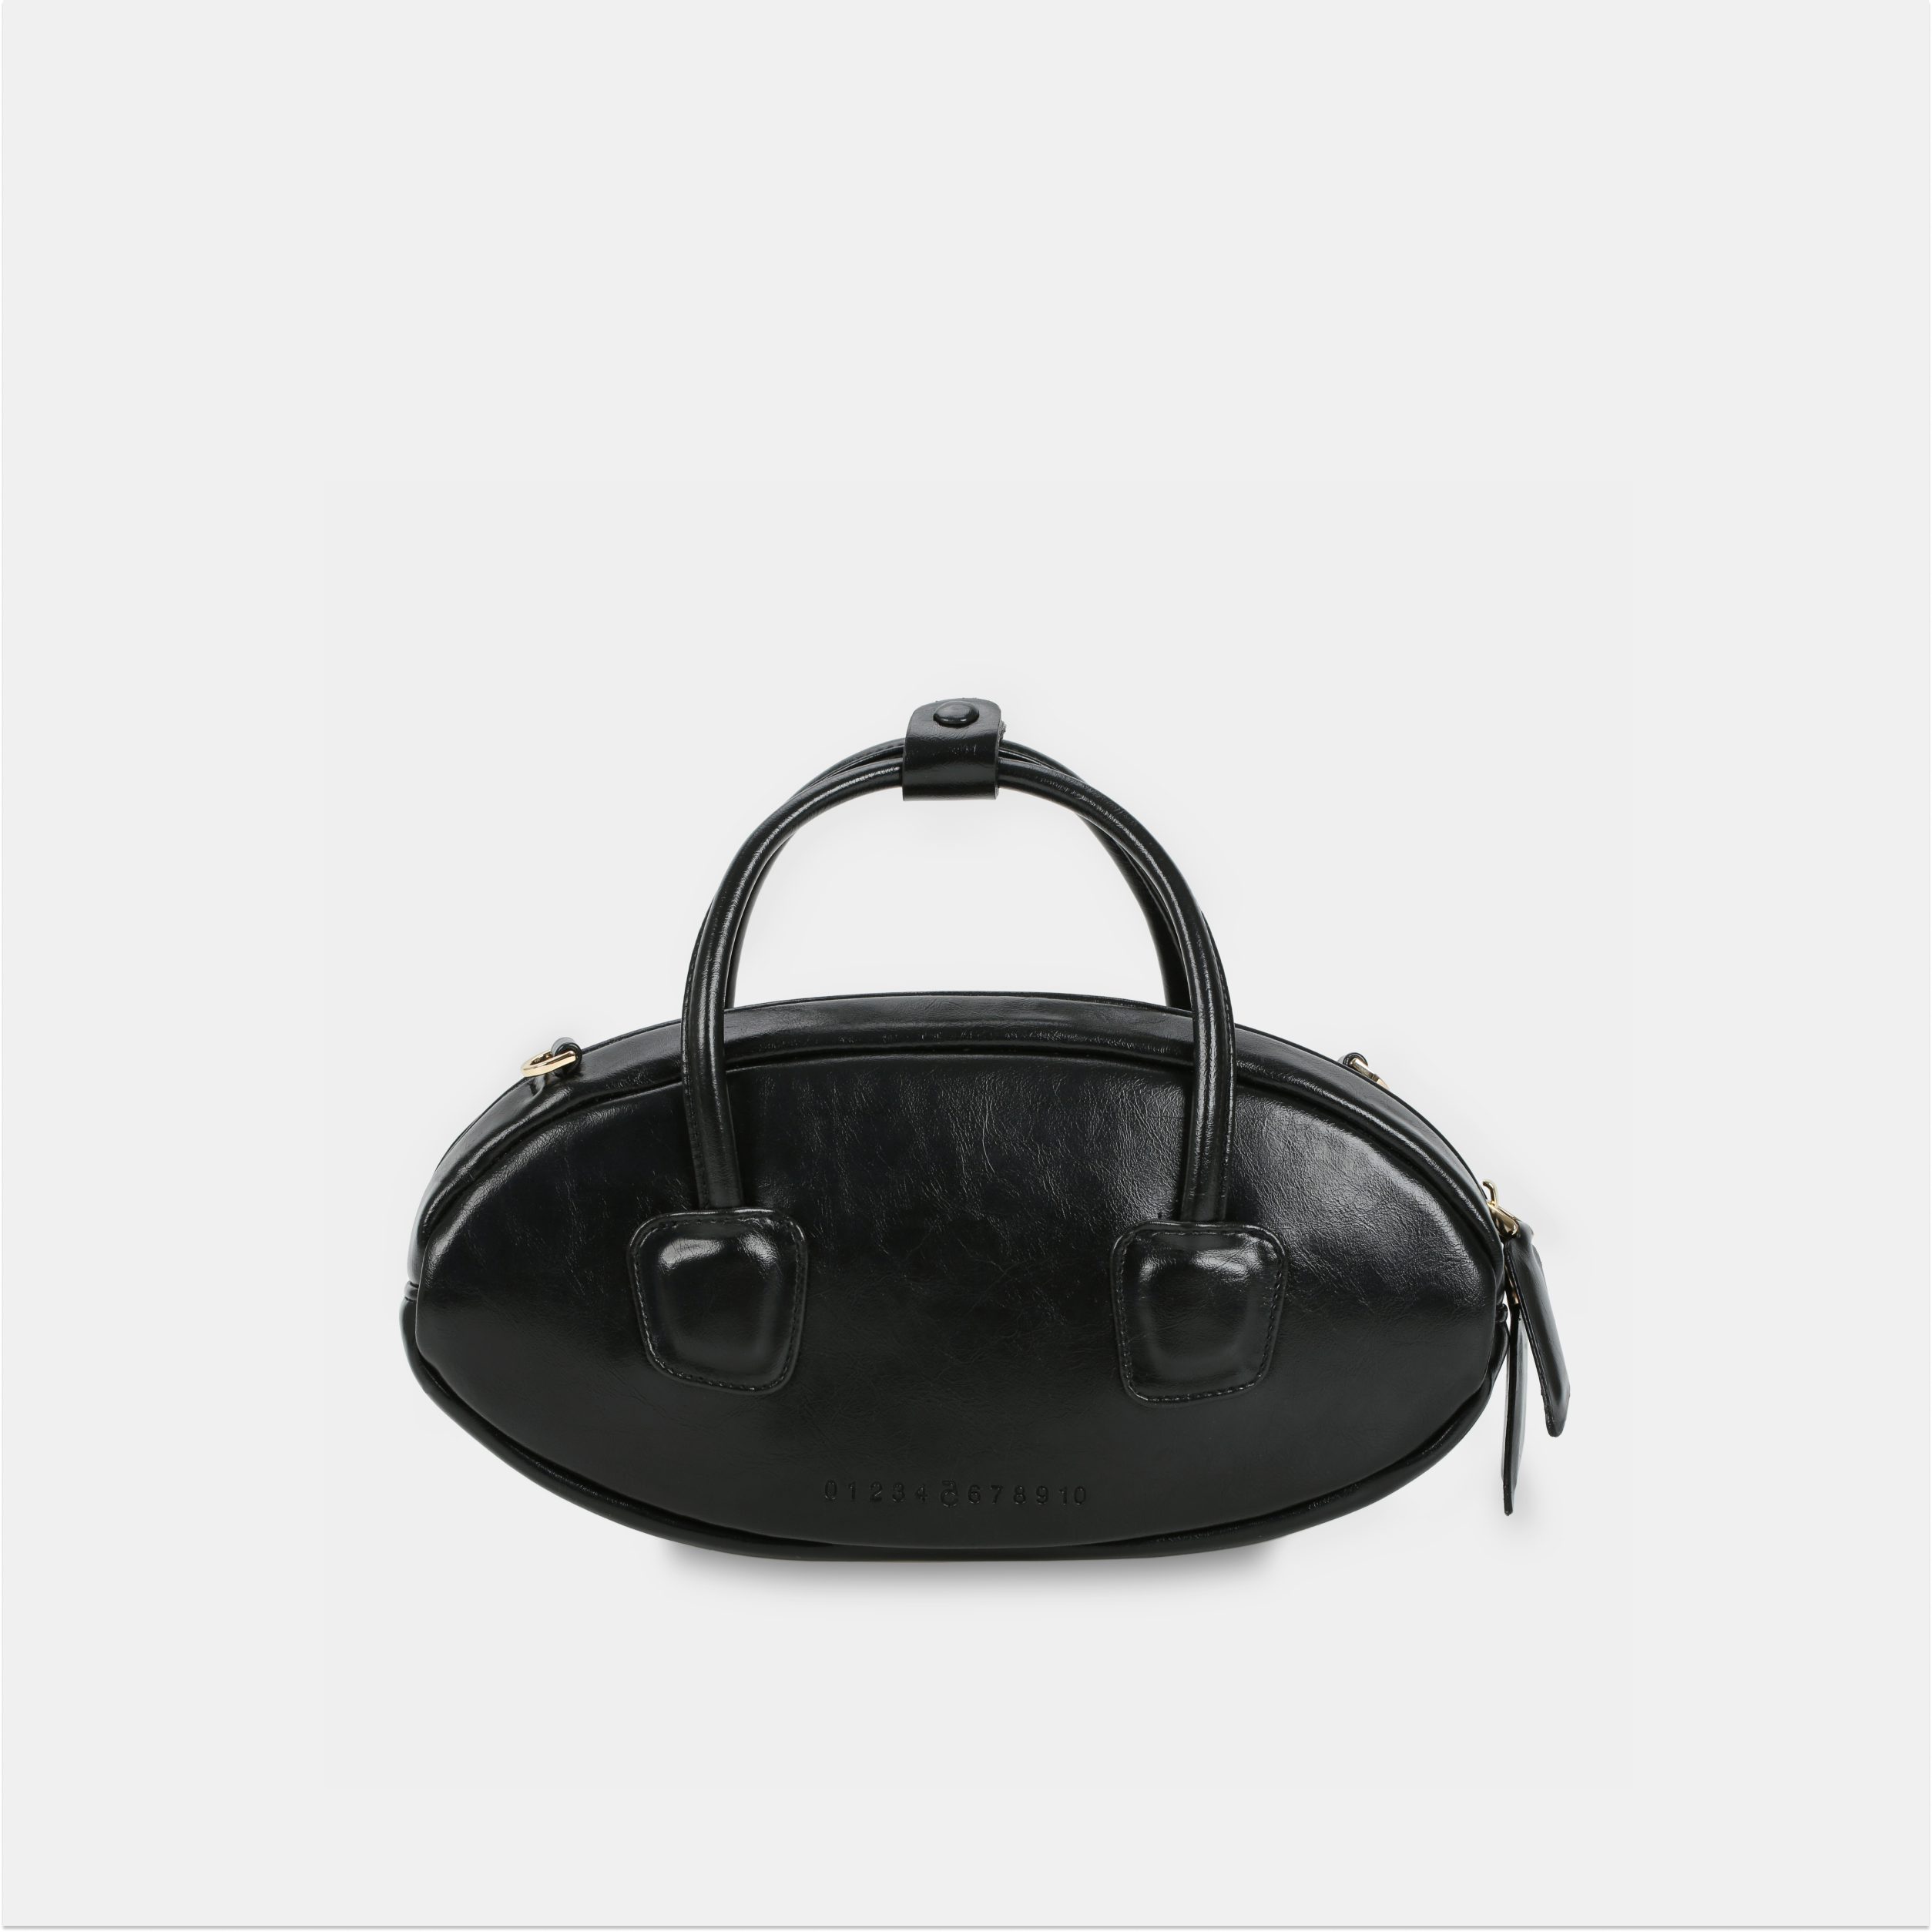 Black EGG handbag